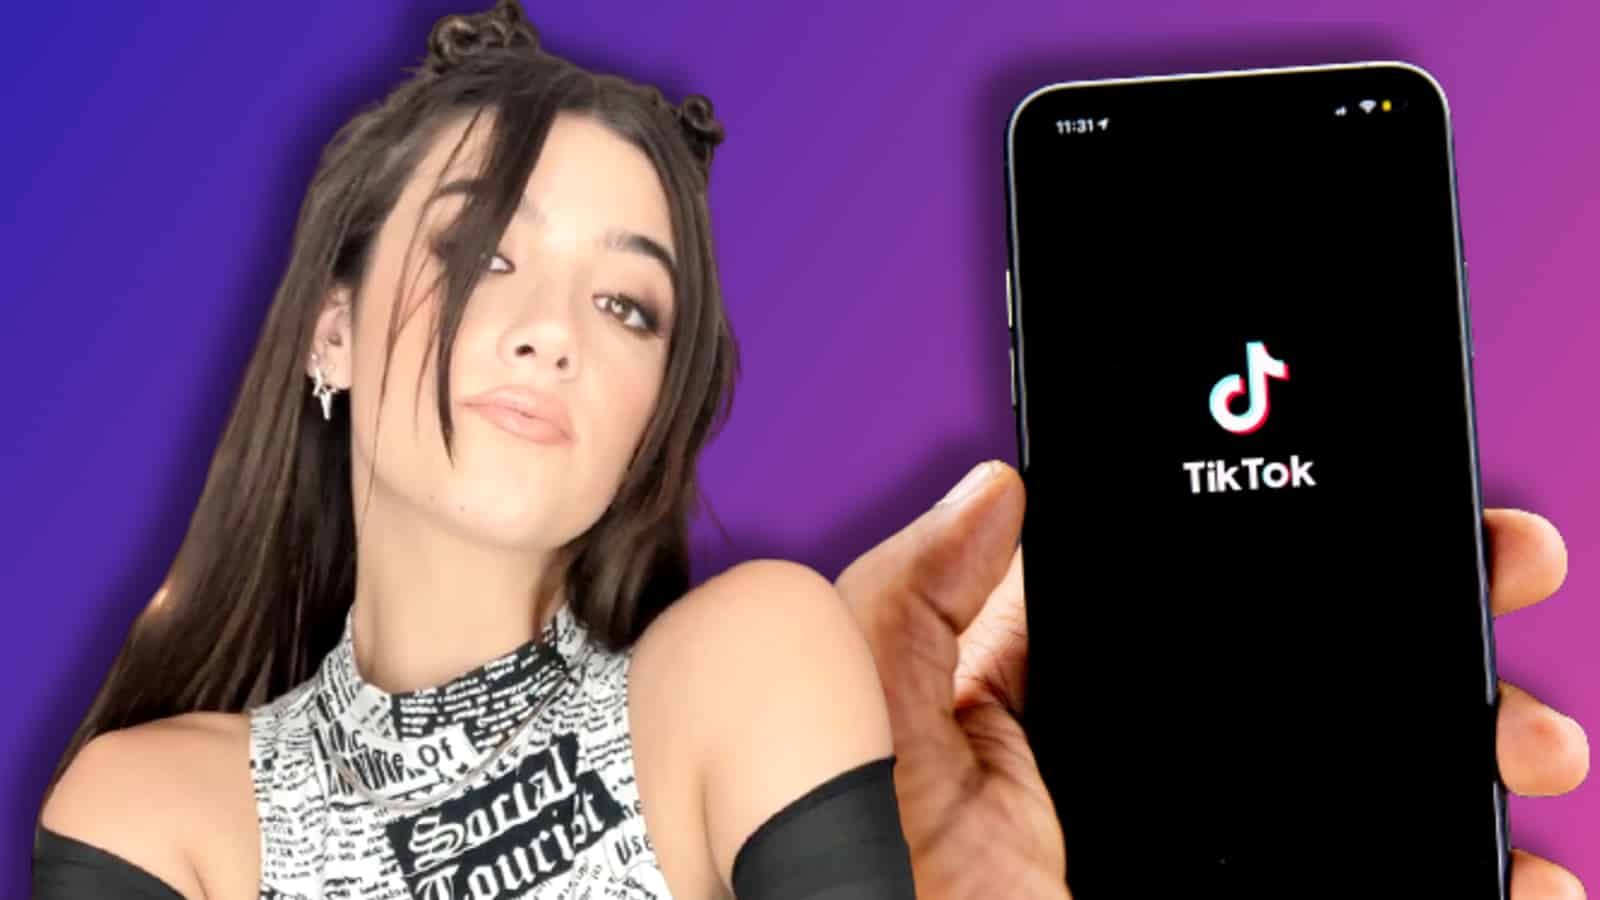 Charli D'Amelio next to a phone with a TikTok logo